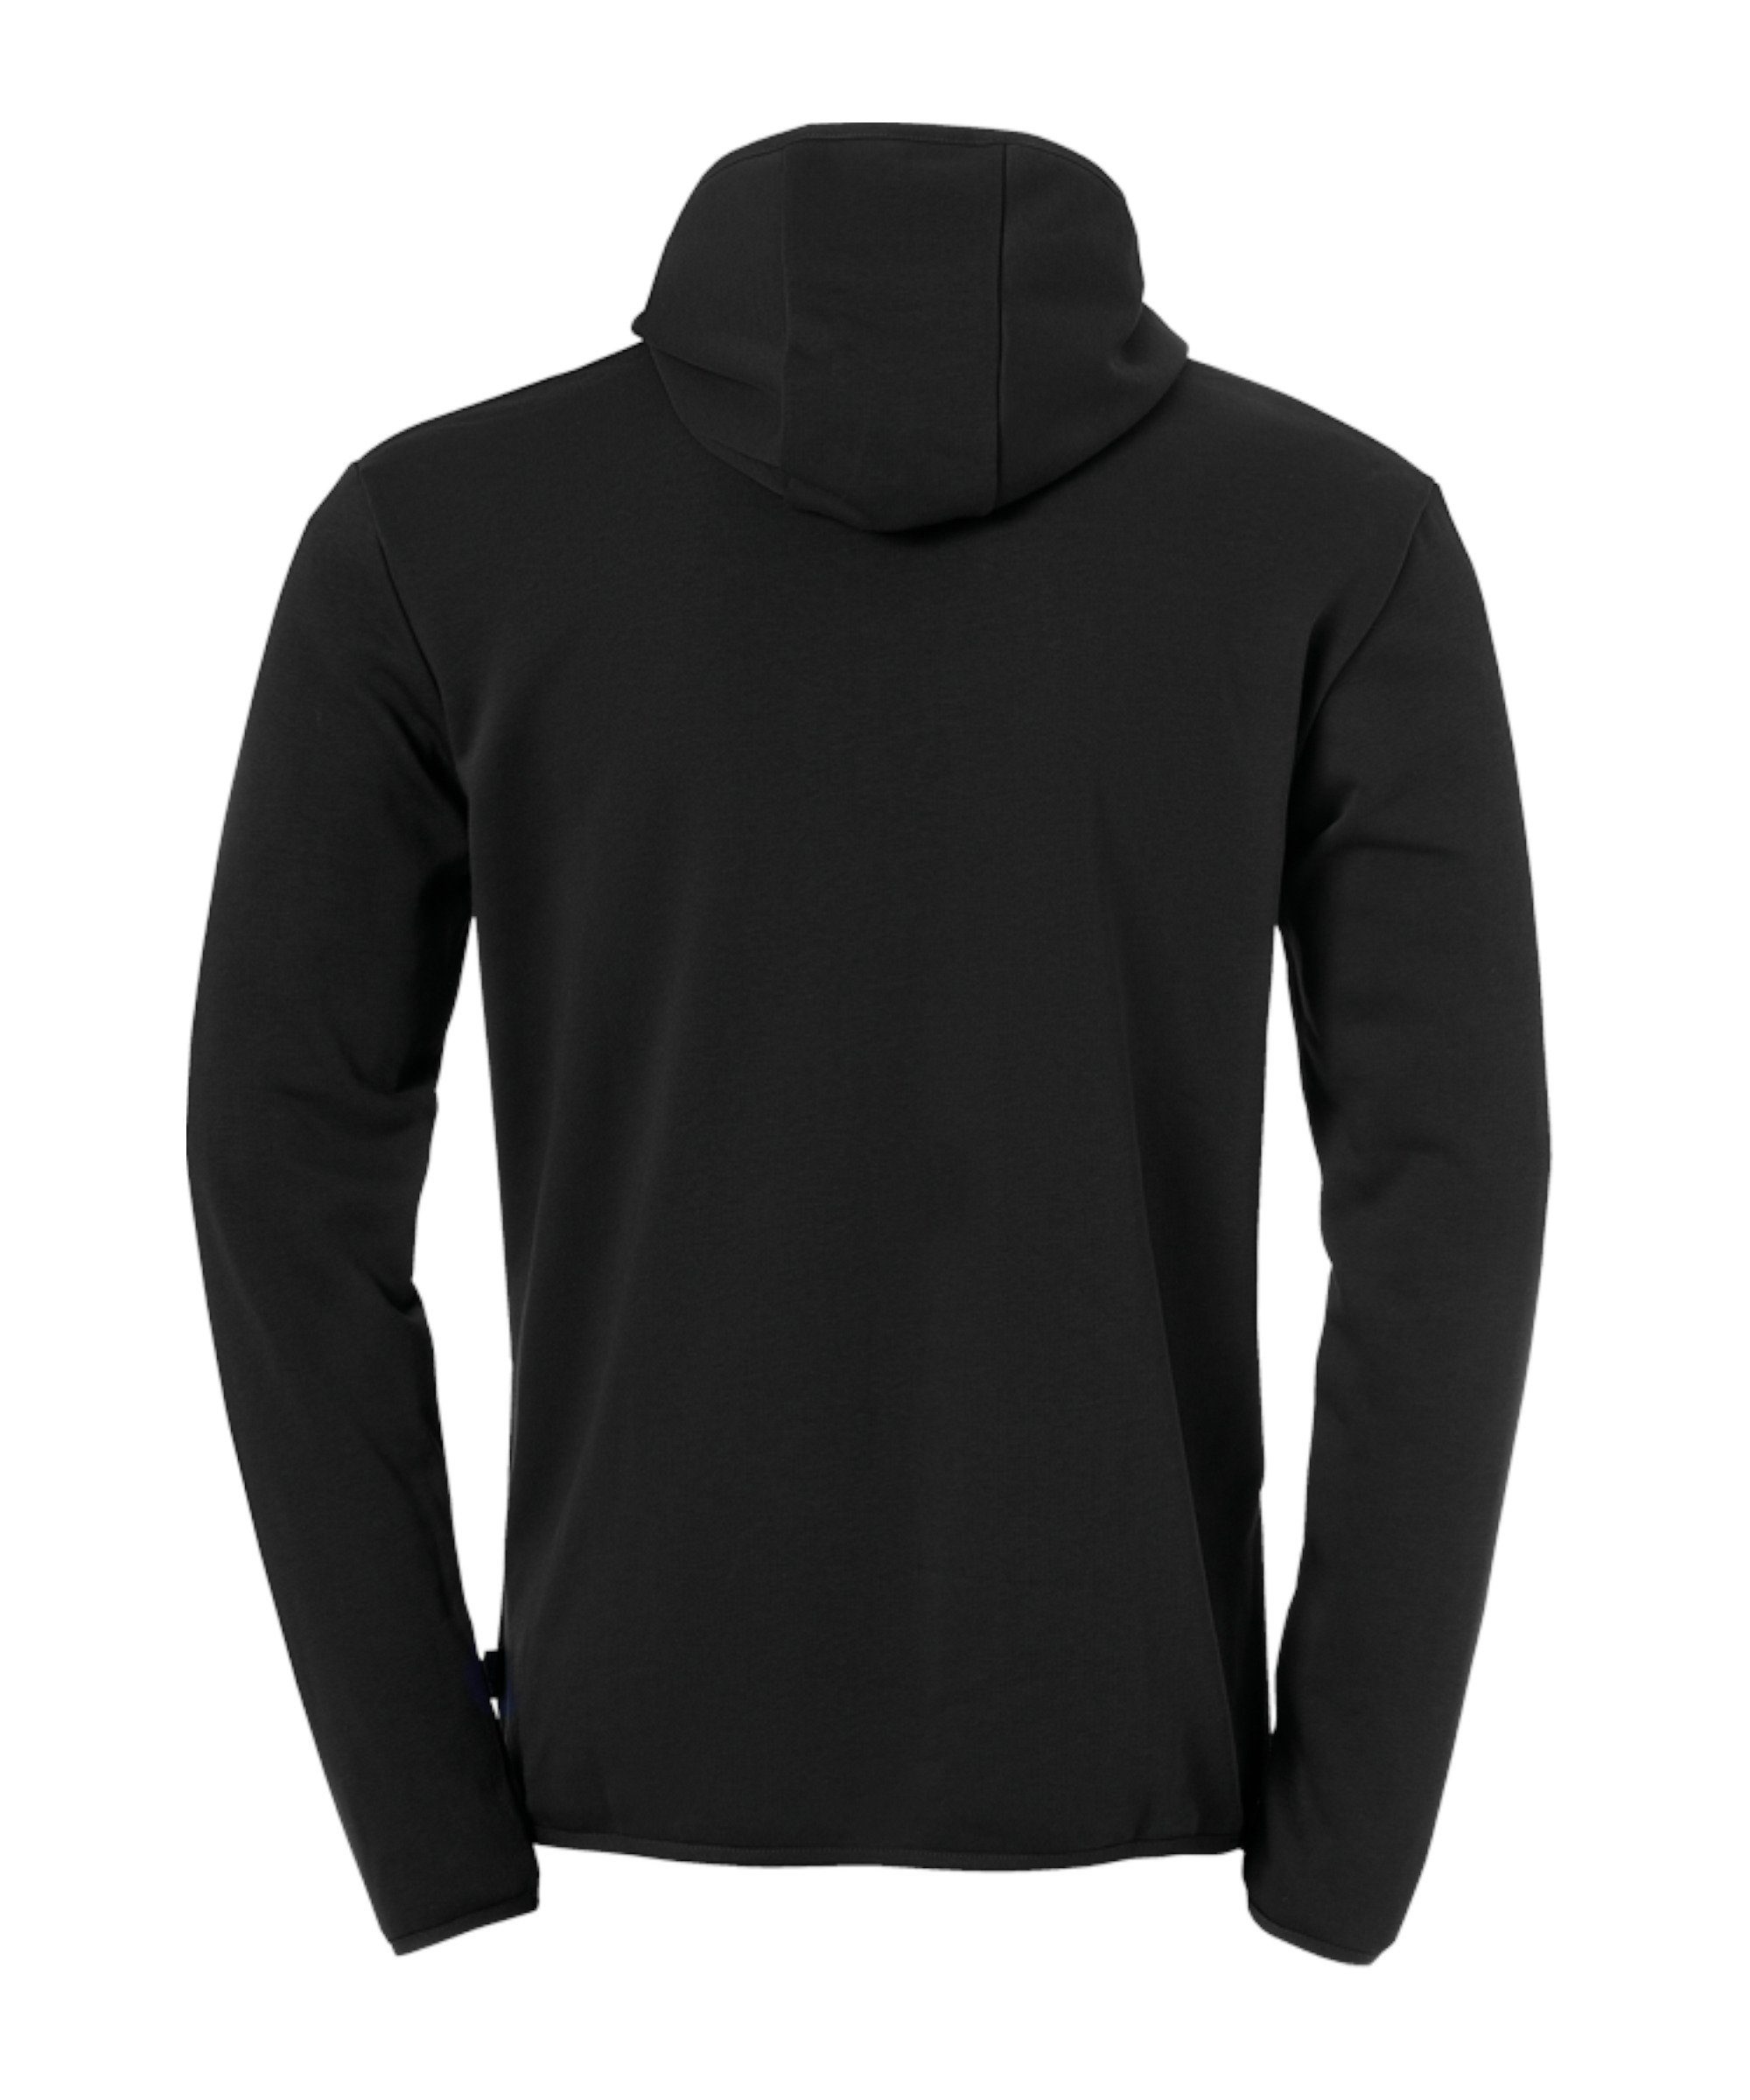 uhlsport Sweater Essential Dunkel schwarz Hoody